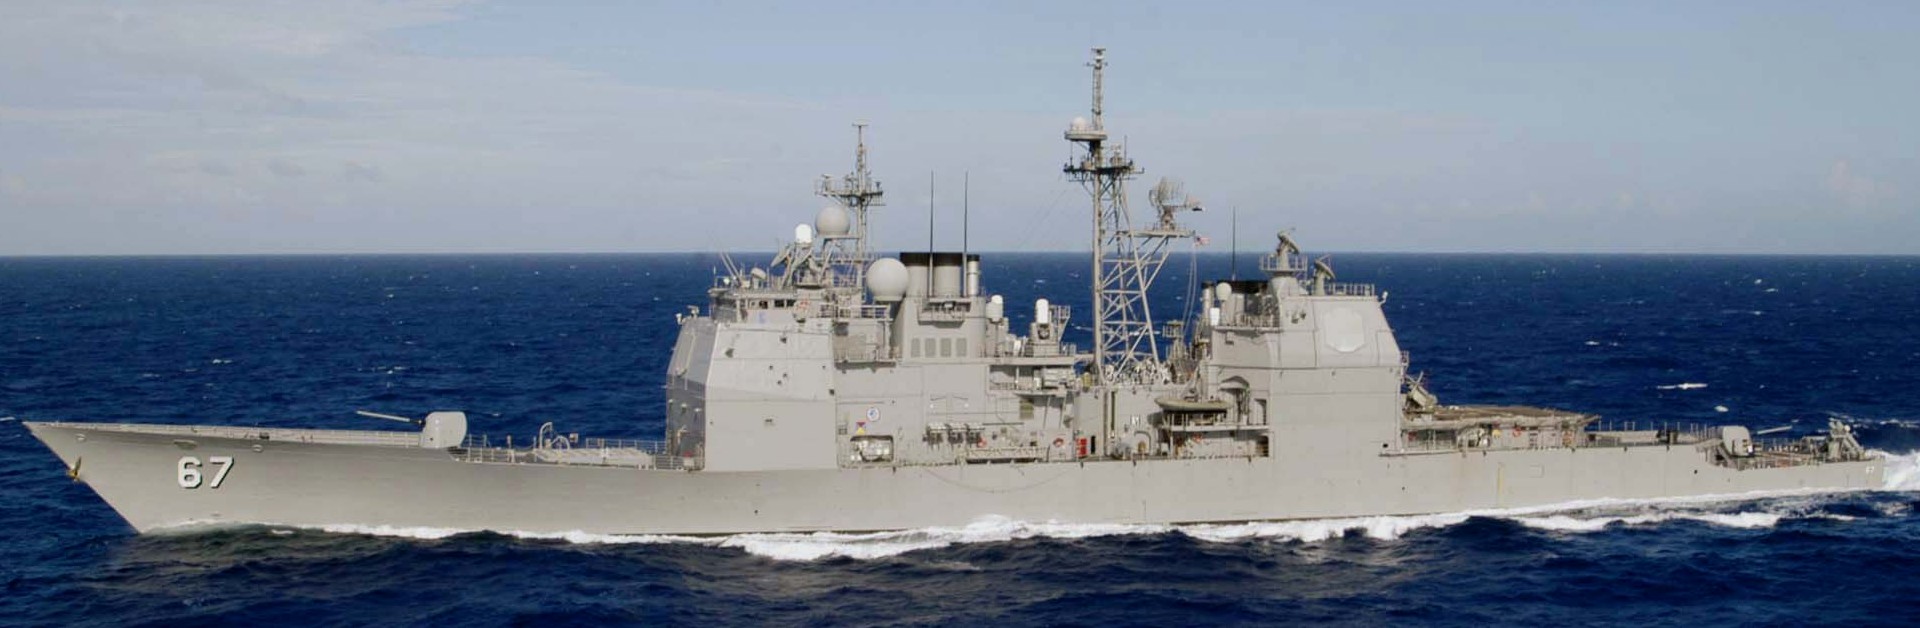 cg-67 uss shiloh ticonderoga class guided missile cruiser aegis us navy 09